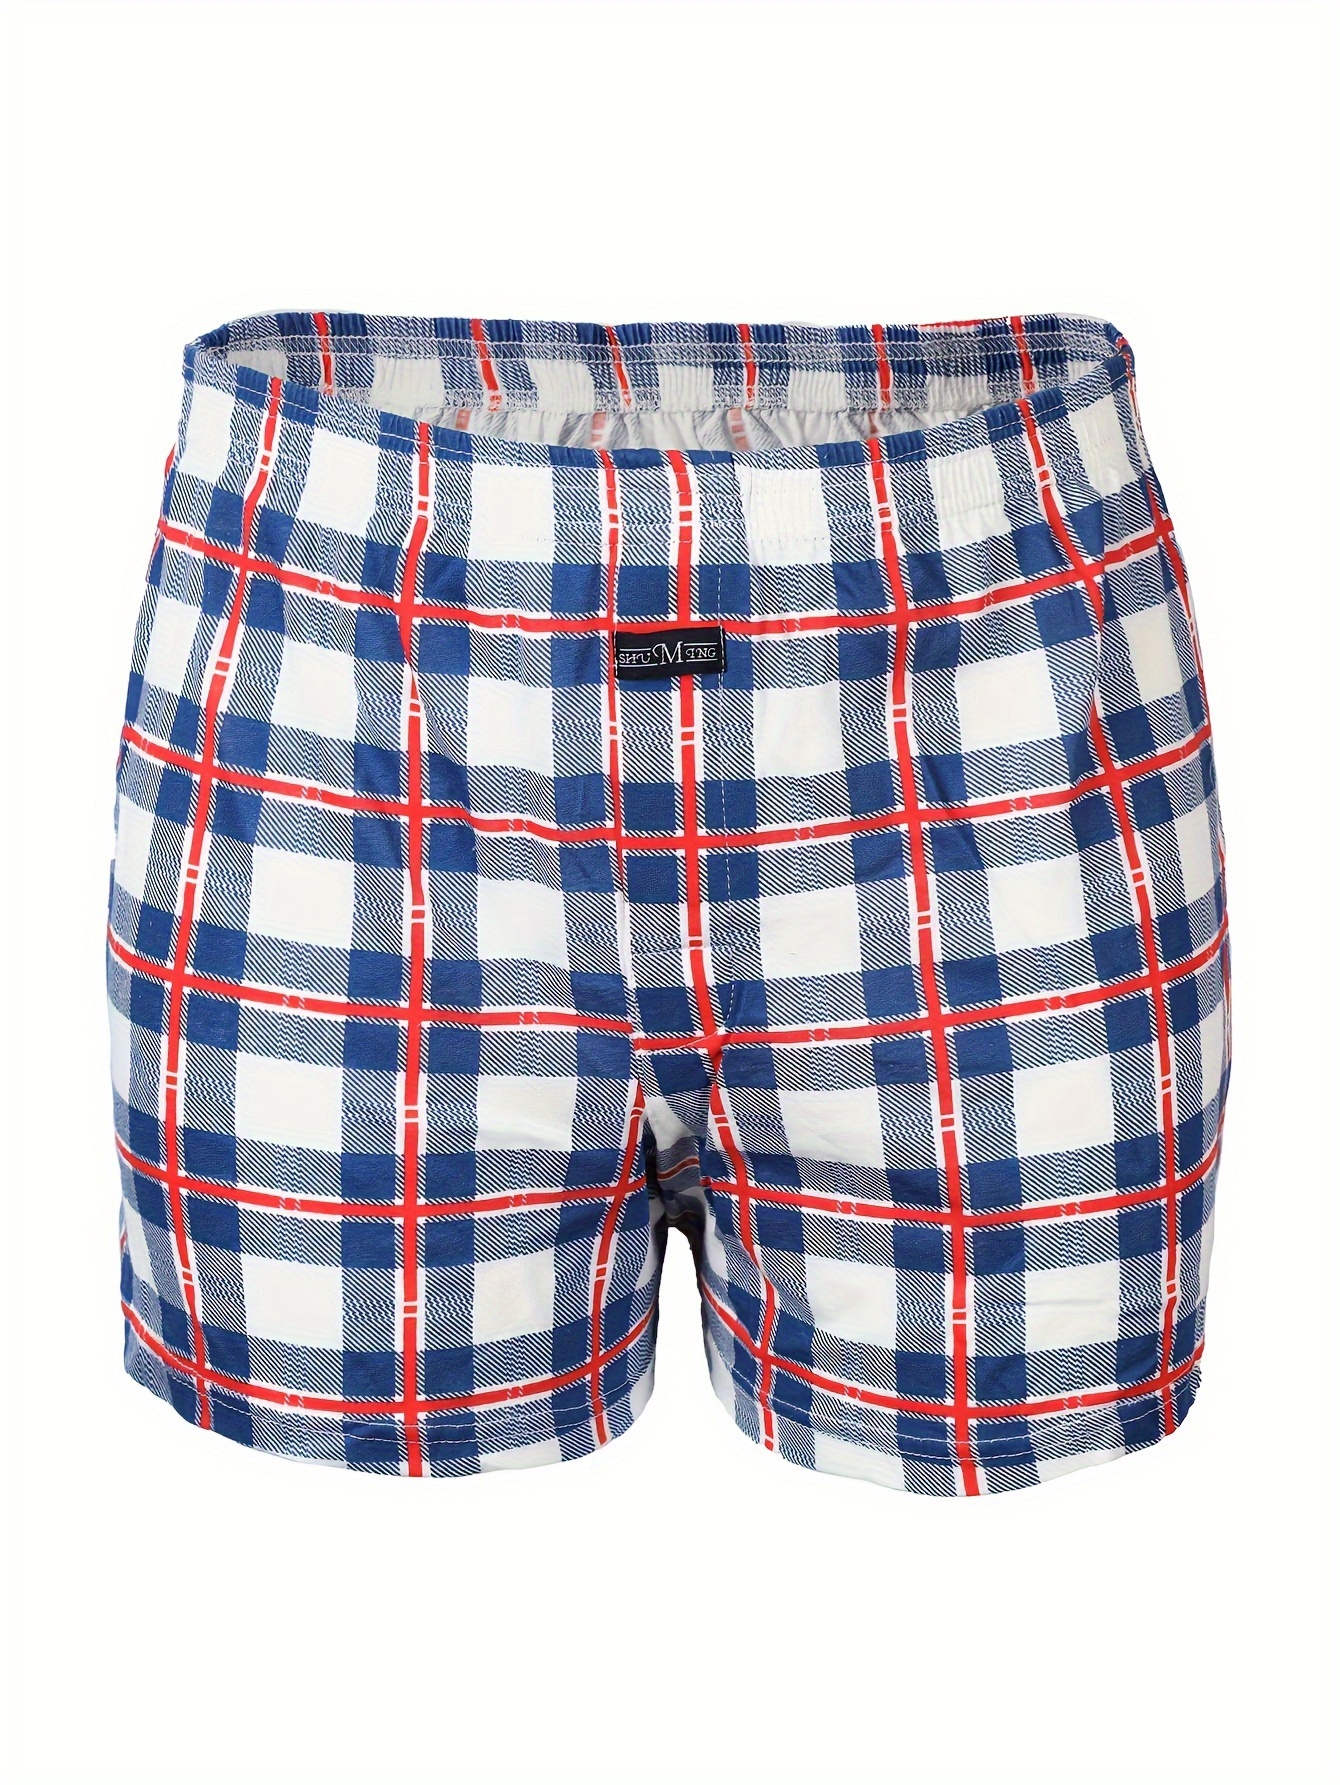 AUSSIEBUM Men's Underwear Comfortable Cotton Sweat-absorbent Casual Boxer  Briefs